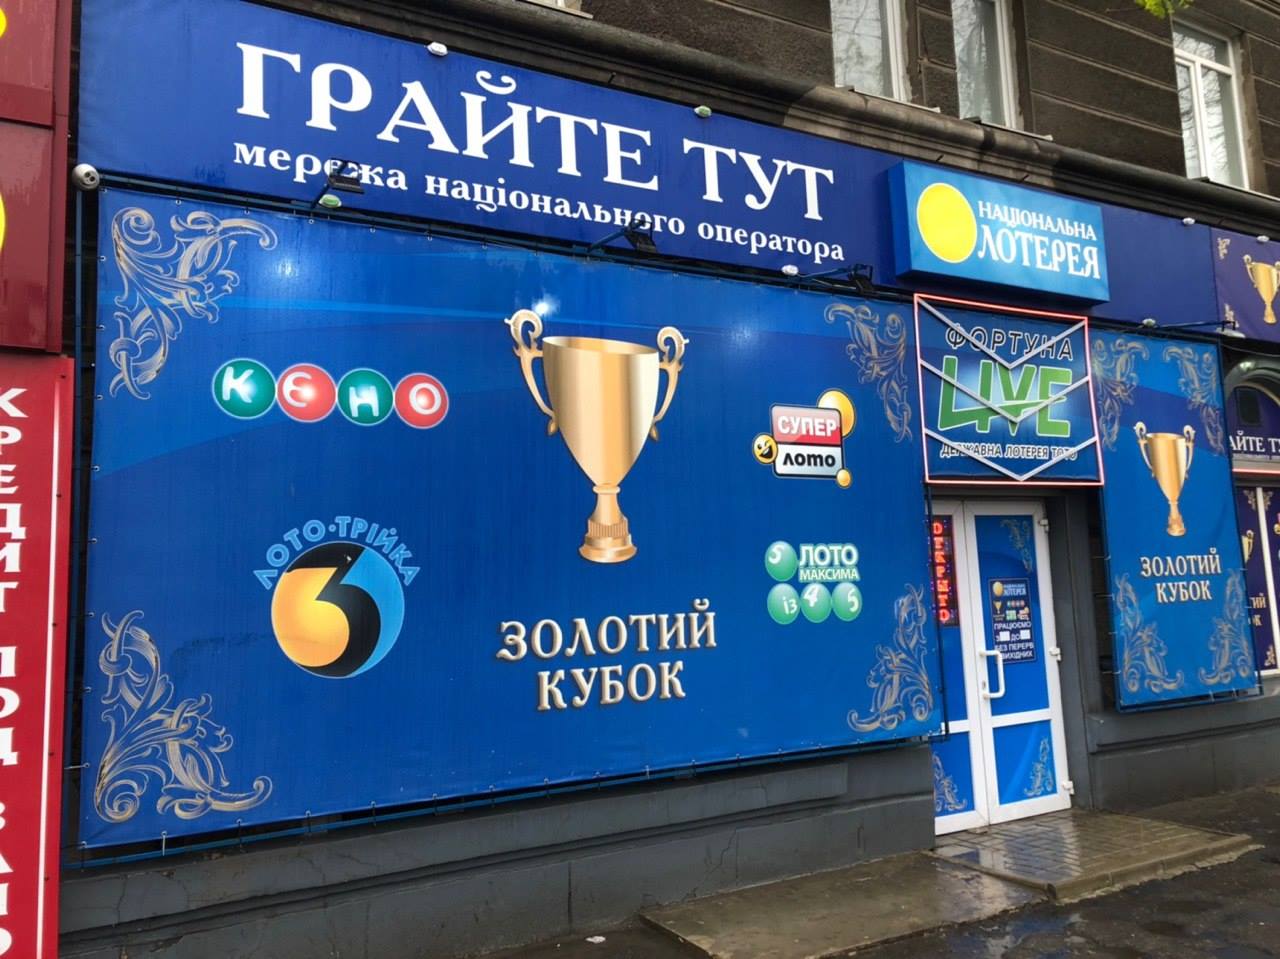 "Національна лотерея" попала под раздачу в Днепре. Новости Днепра